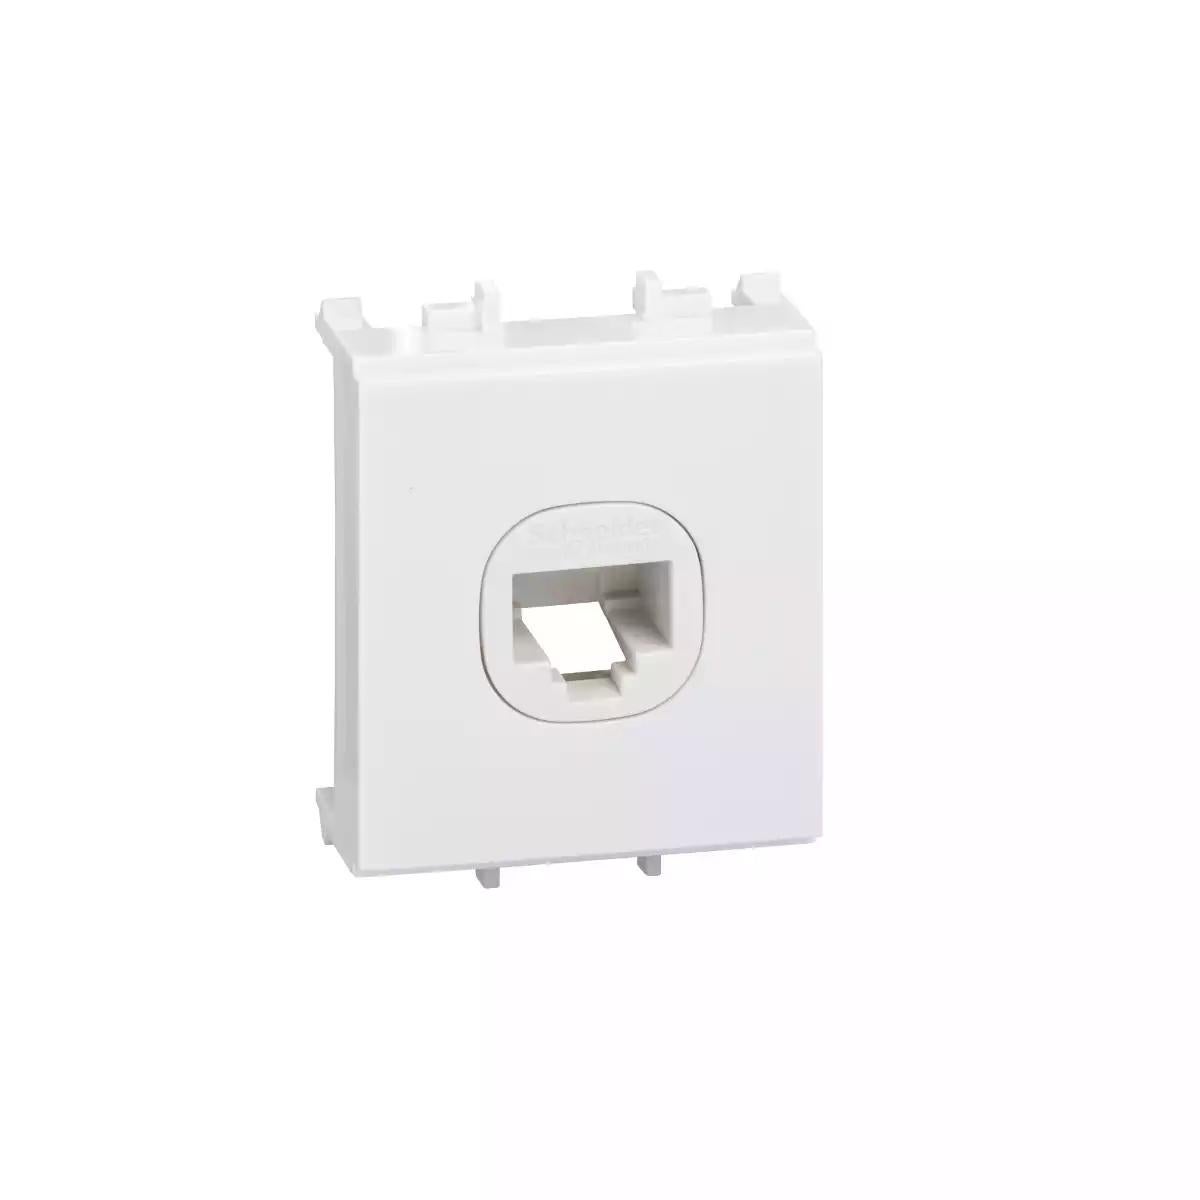 S-Flexi - telephone socket - 4 pin - white